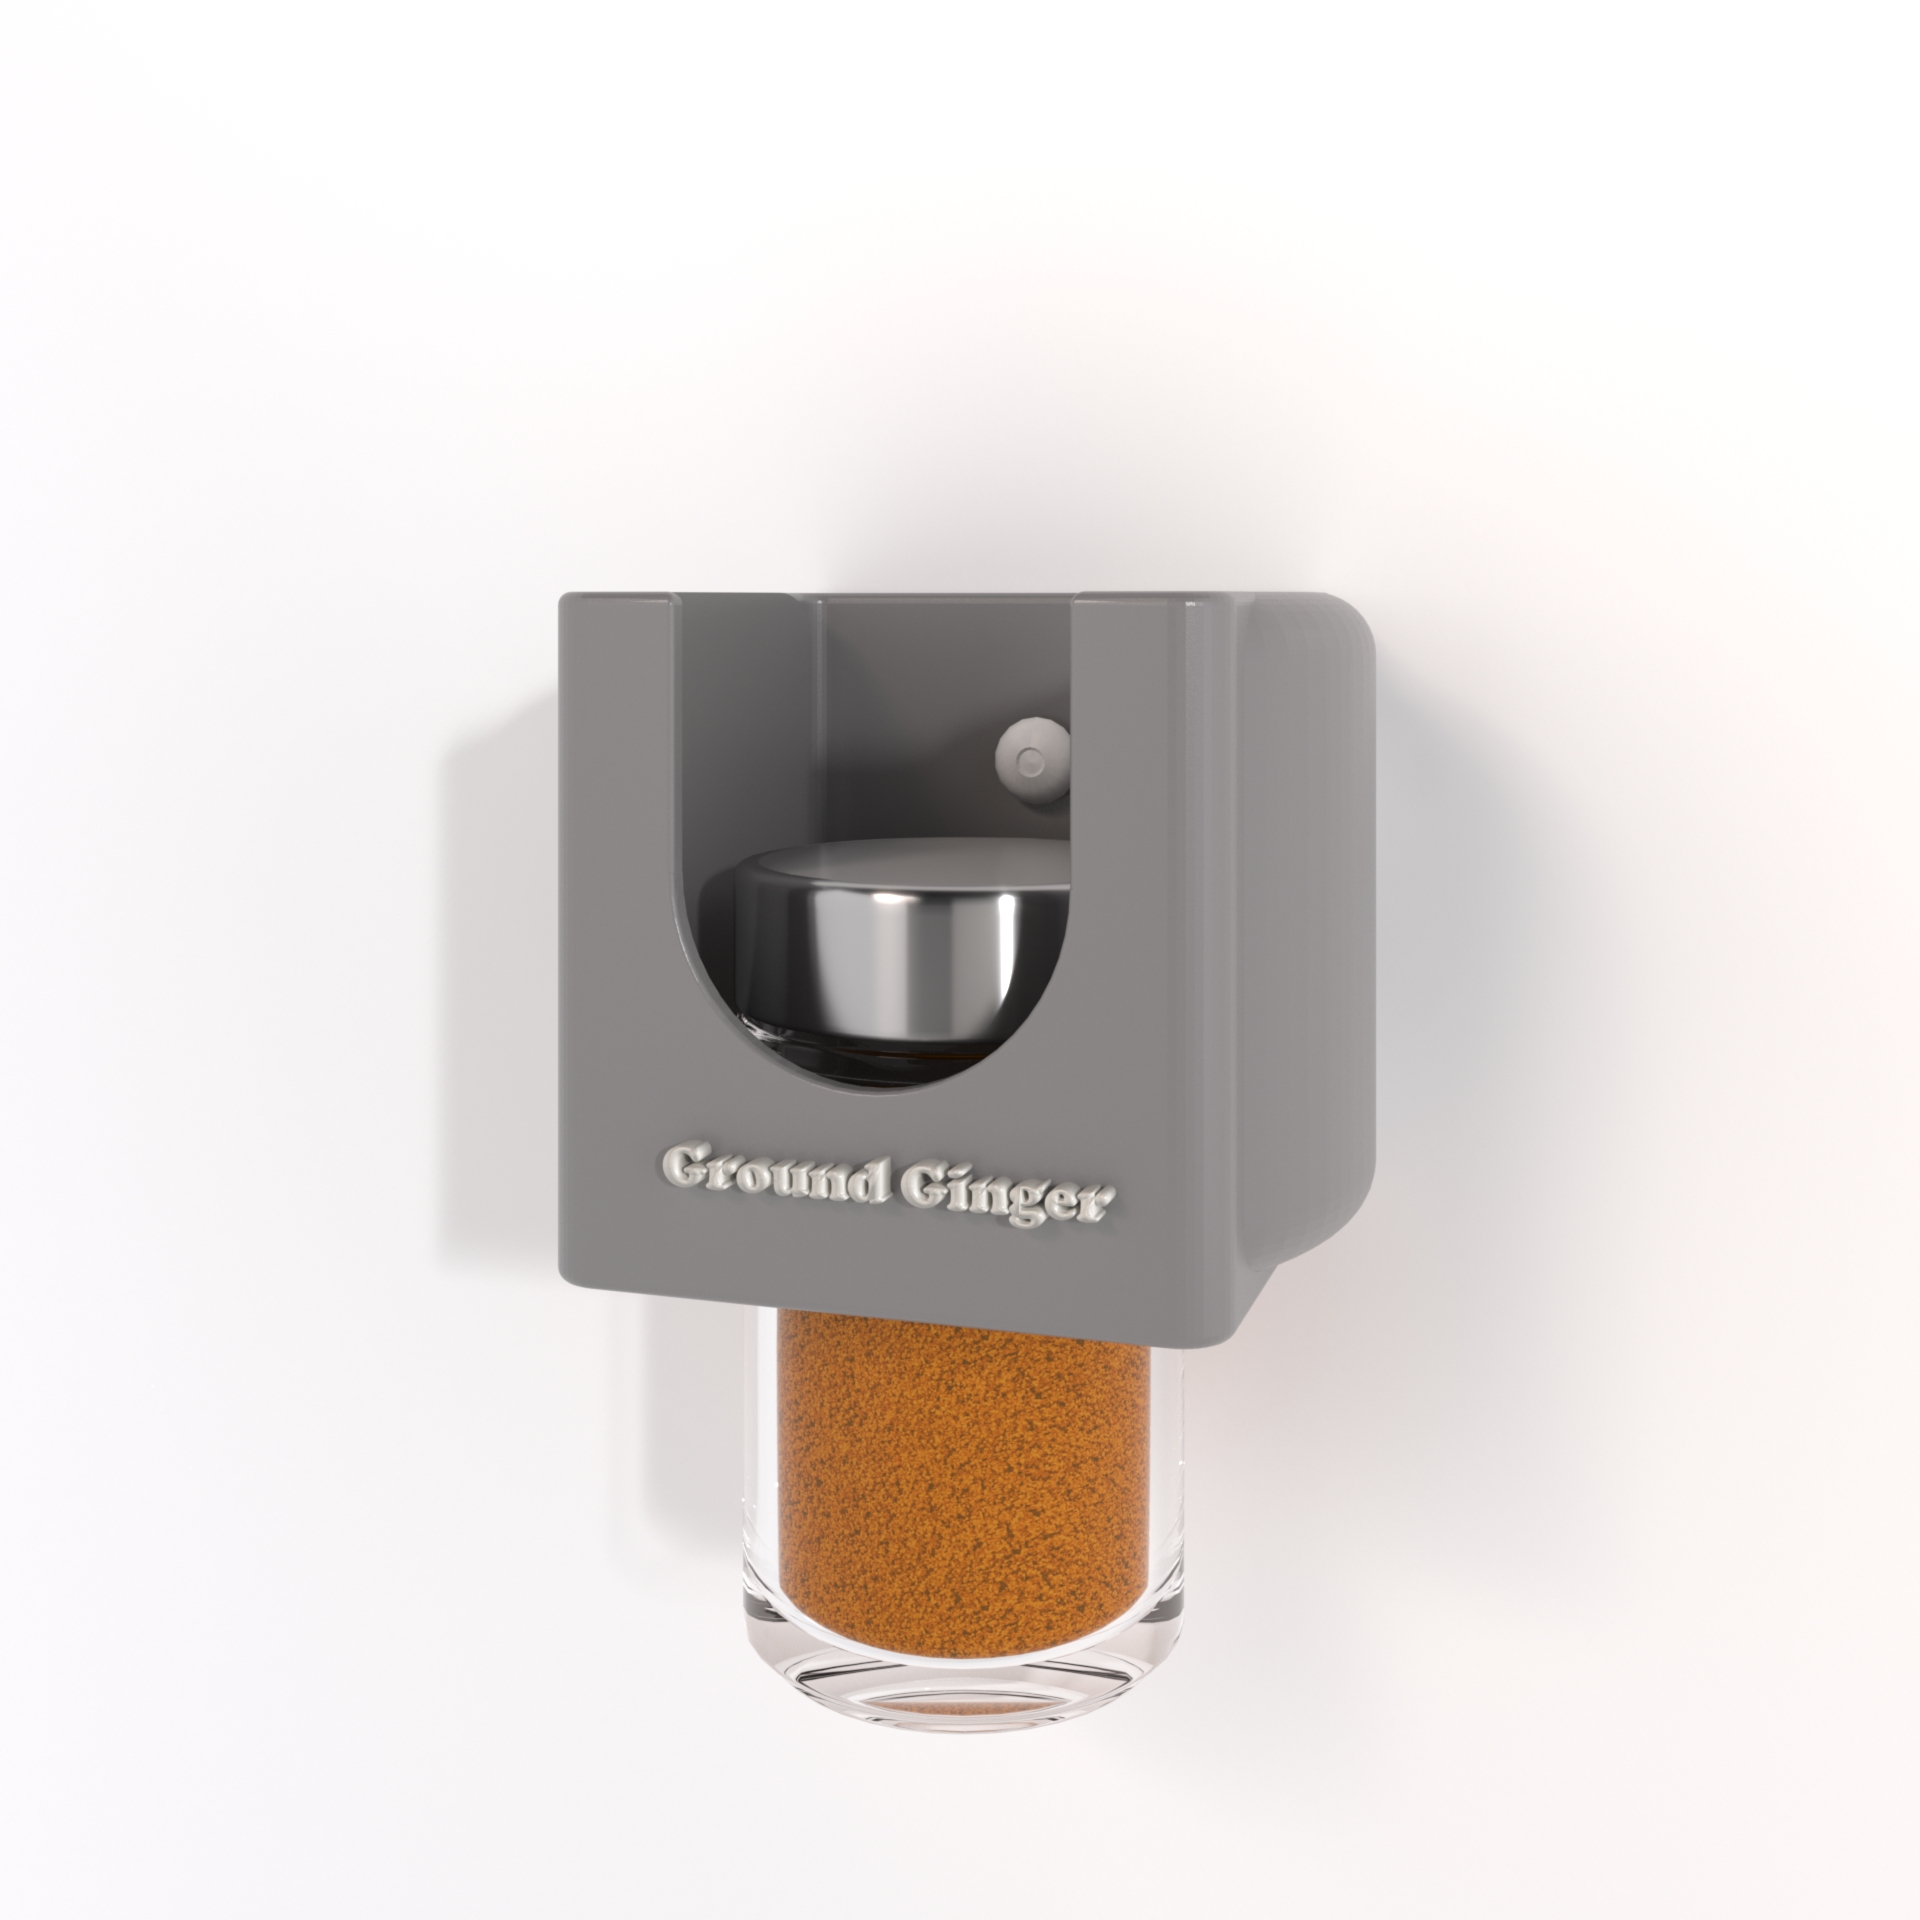 a-spice-holder-ground-ginger